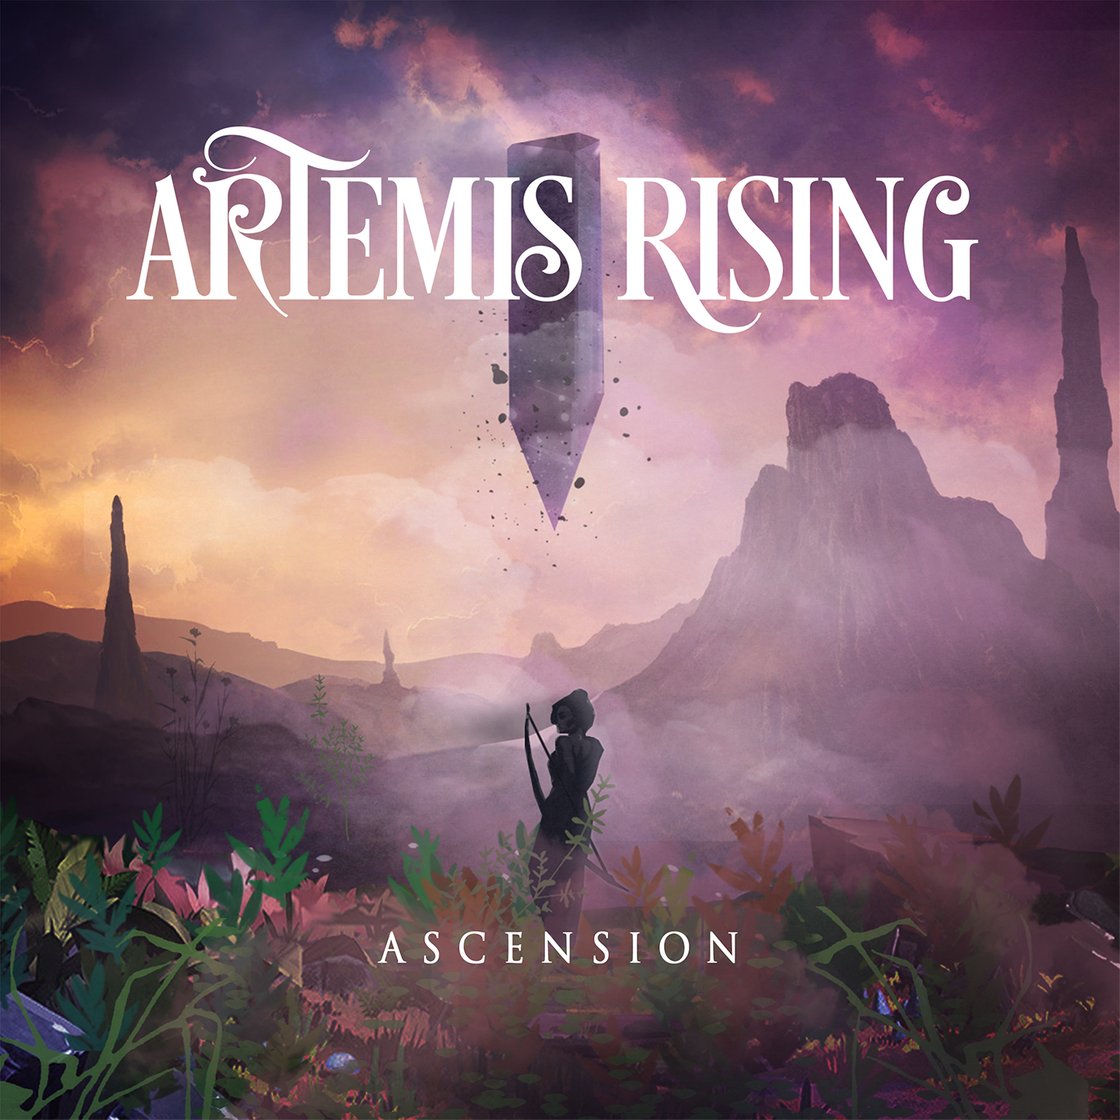 ARTEMIS RISING - Ascension cover 